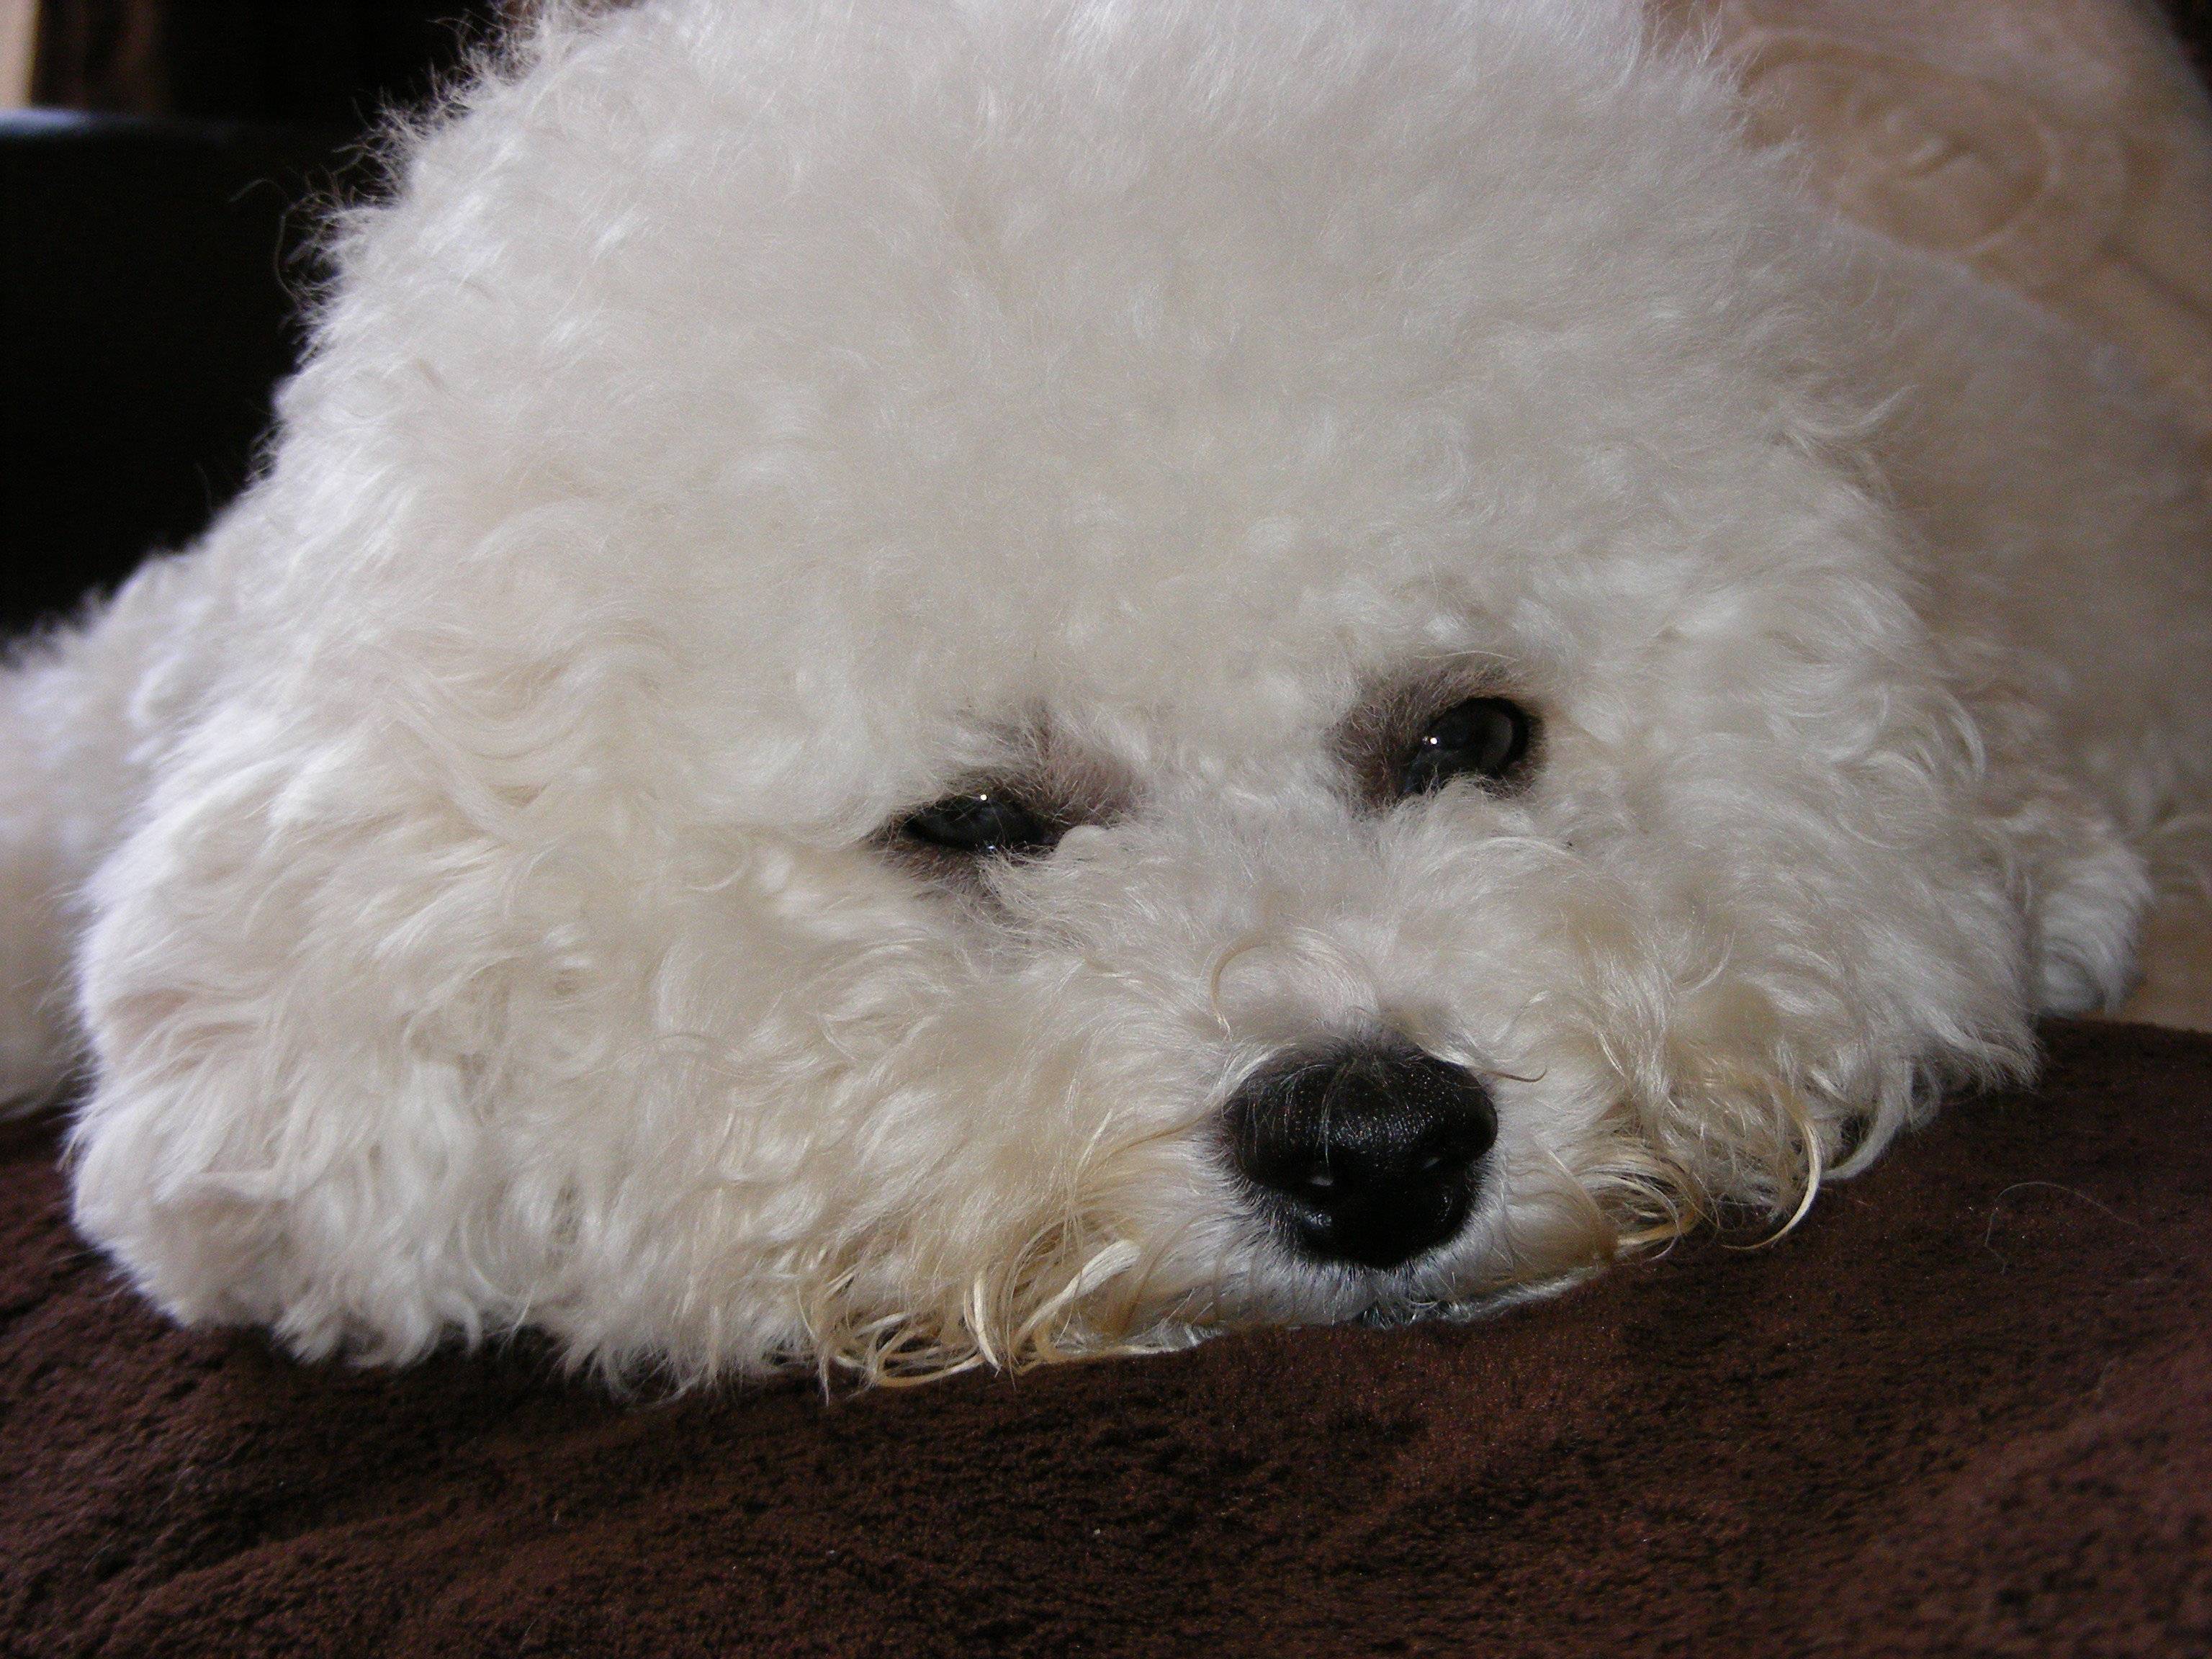 Sad dog breed Bichon Frise wallpaper and image